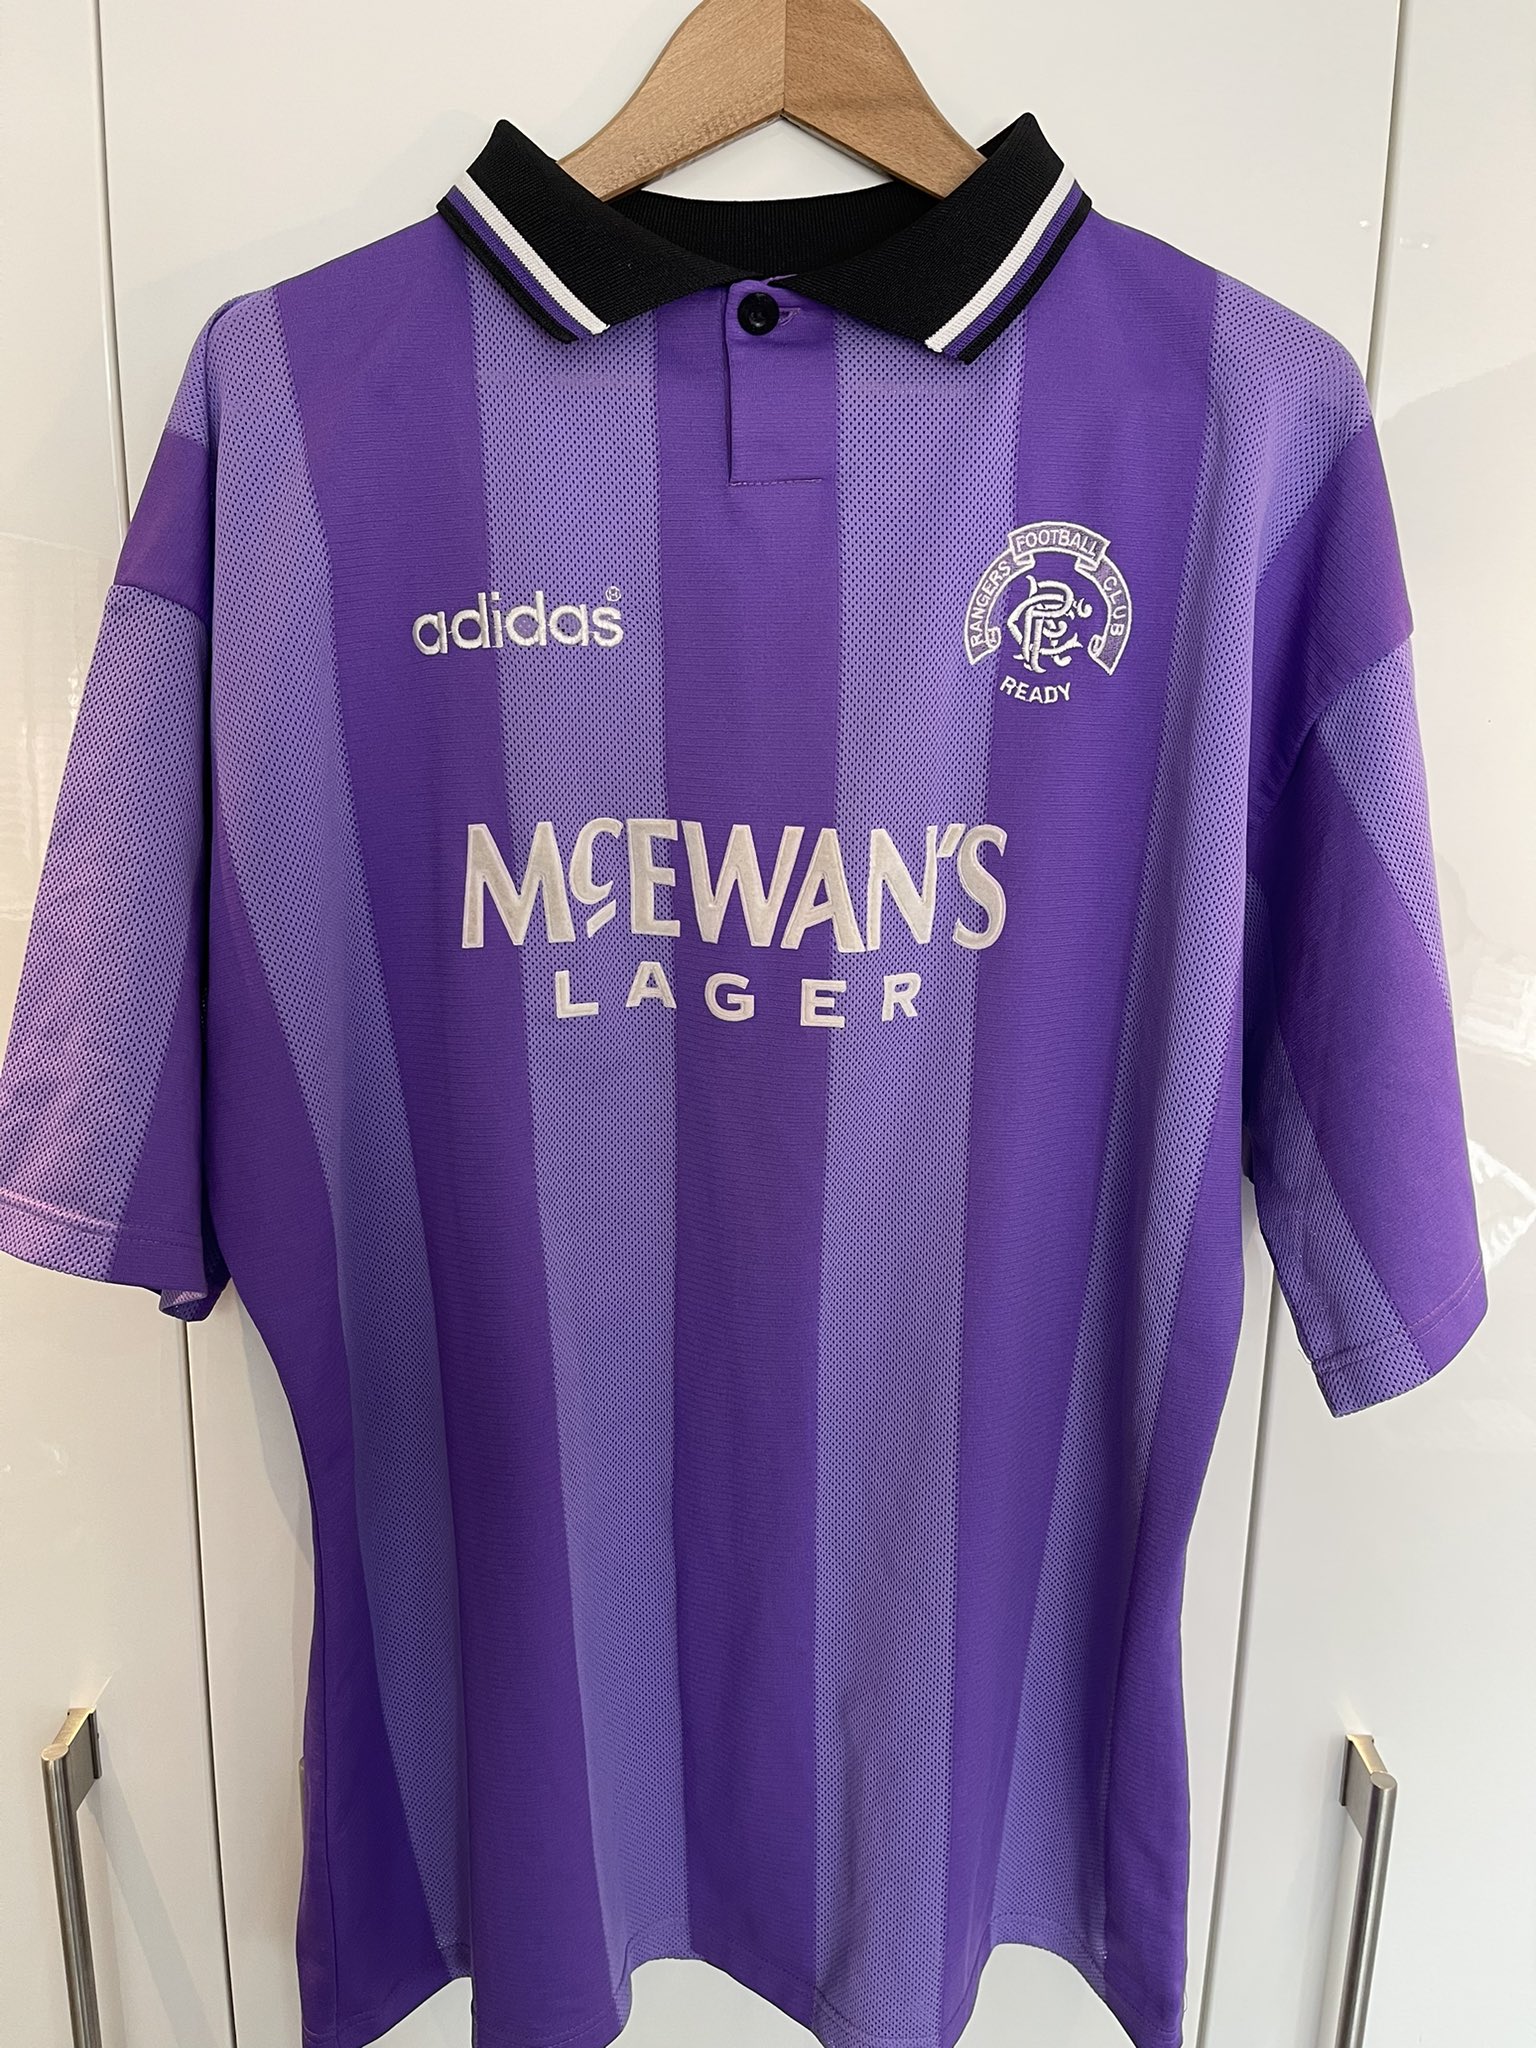 Retro Rangers Away Football Shirt 94/95